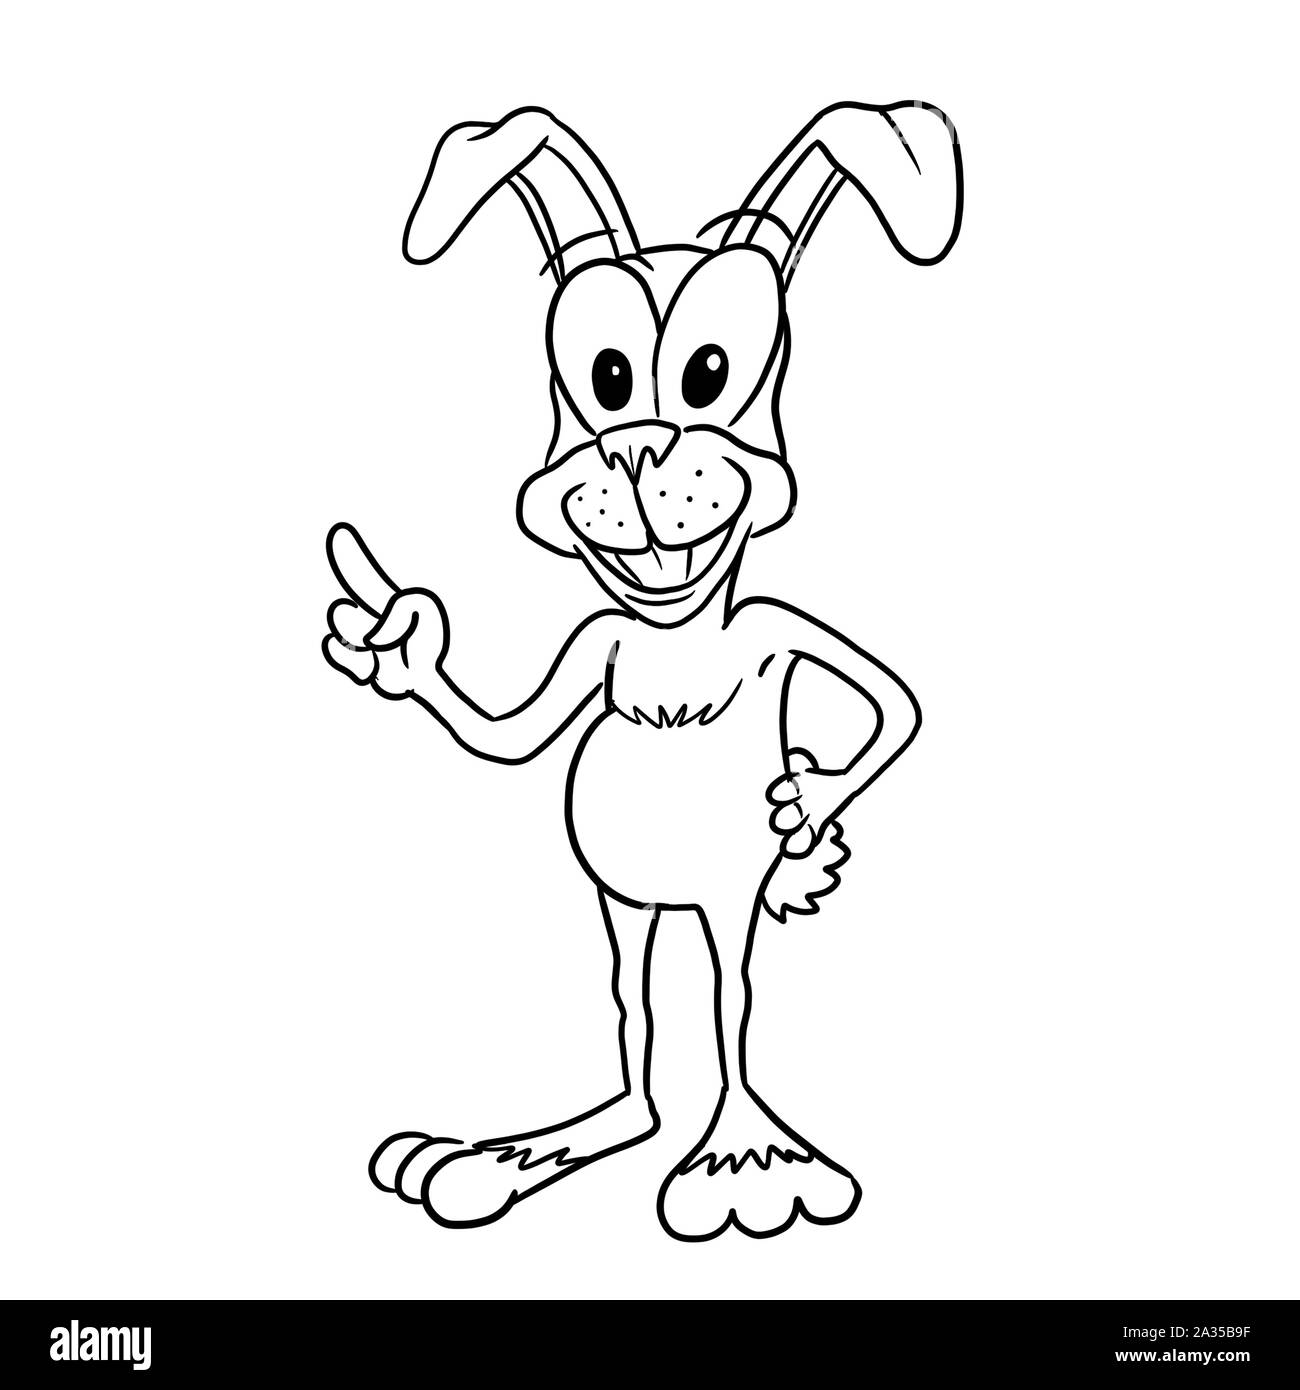 a white rabbit original character mascot pointing upwards illustration art Stock Photo